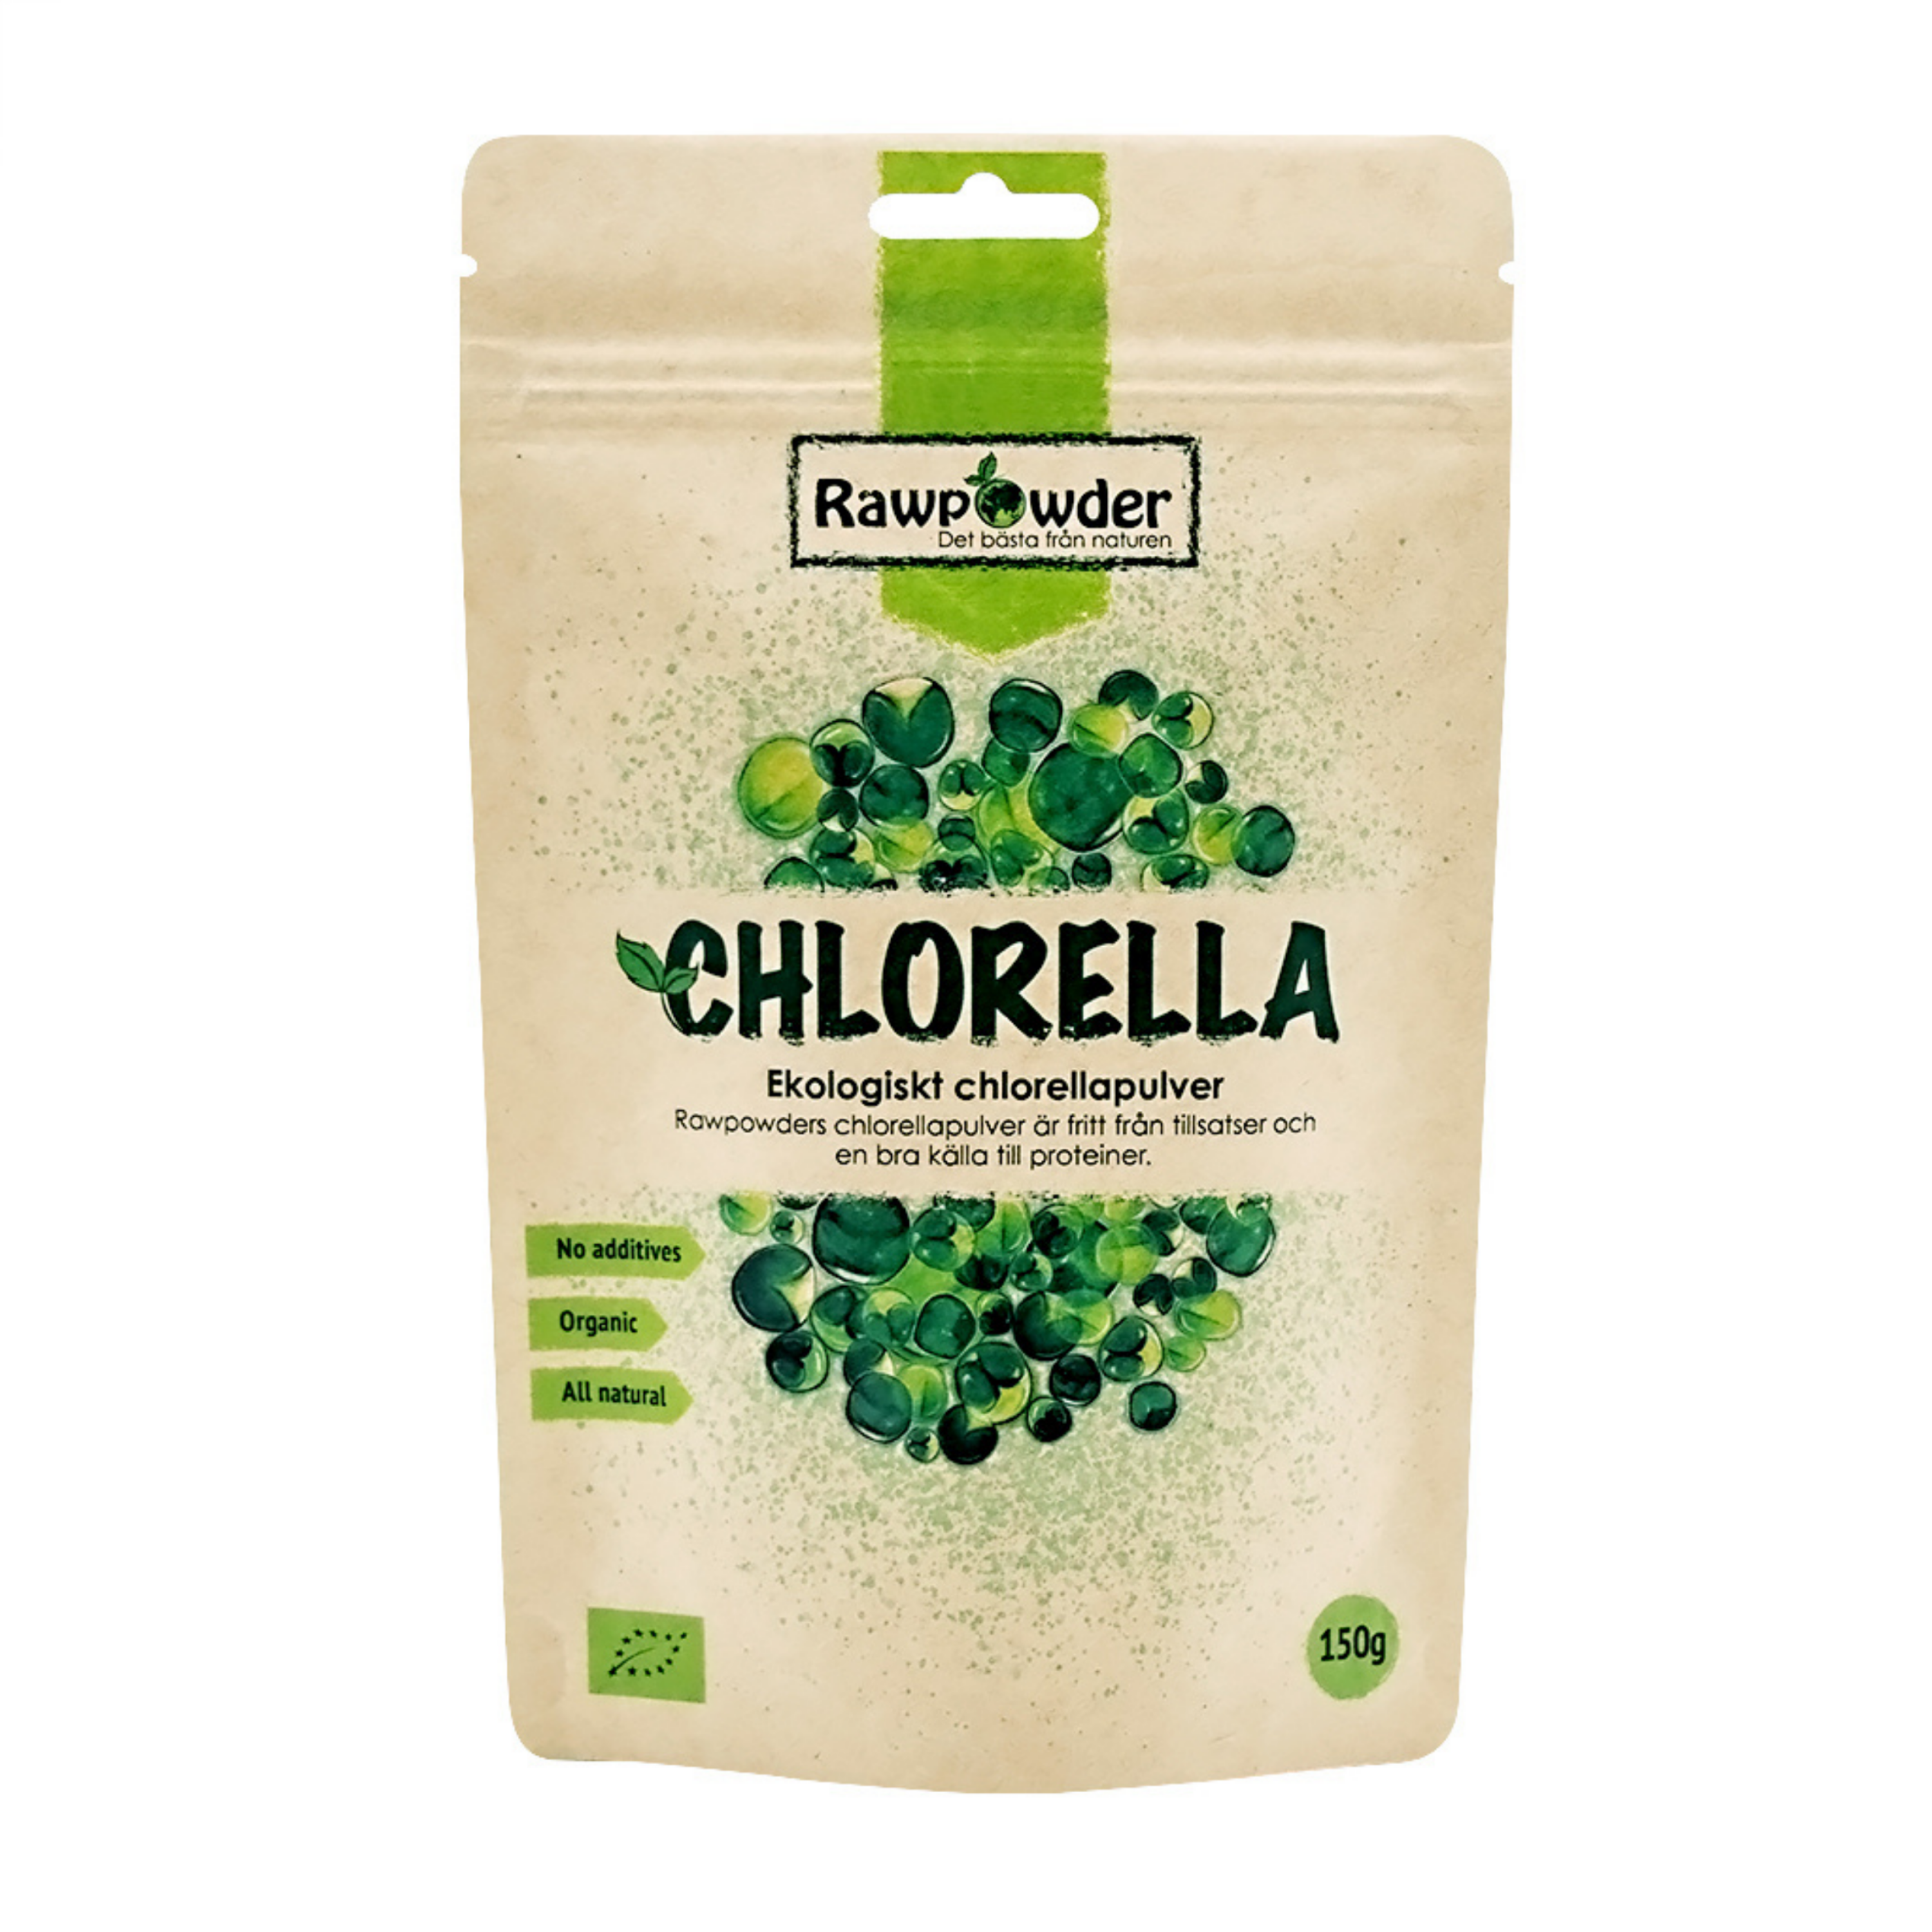 Klorofyll – grönt i gröna växter - Hälsokosten